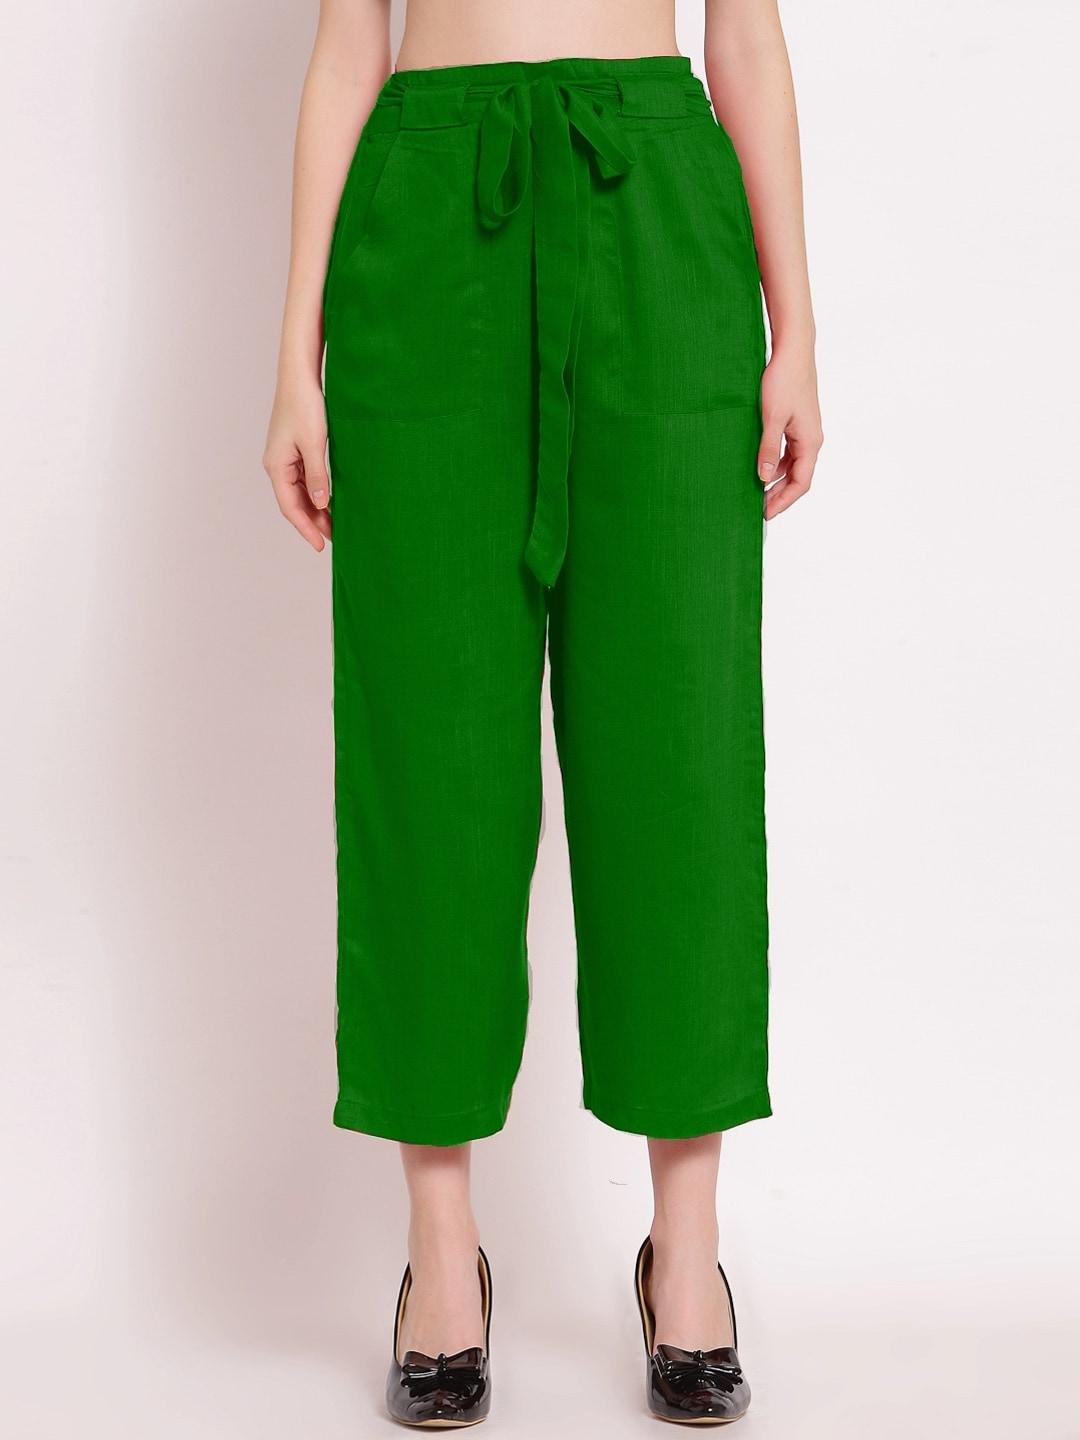 patrorna-women-smart-fit-culottes-trousers